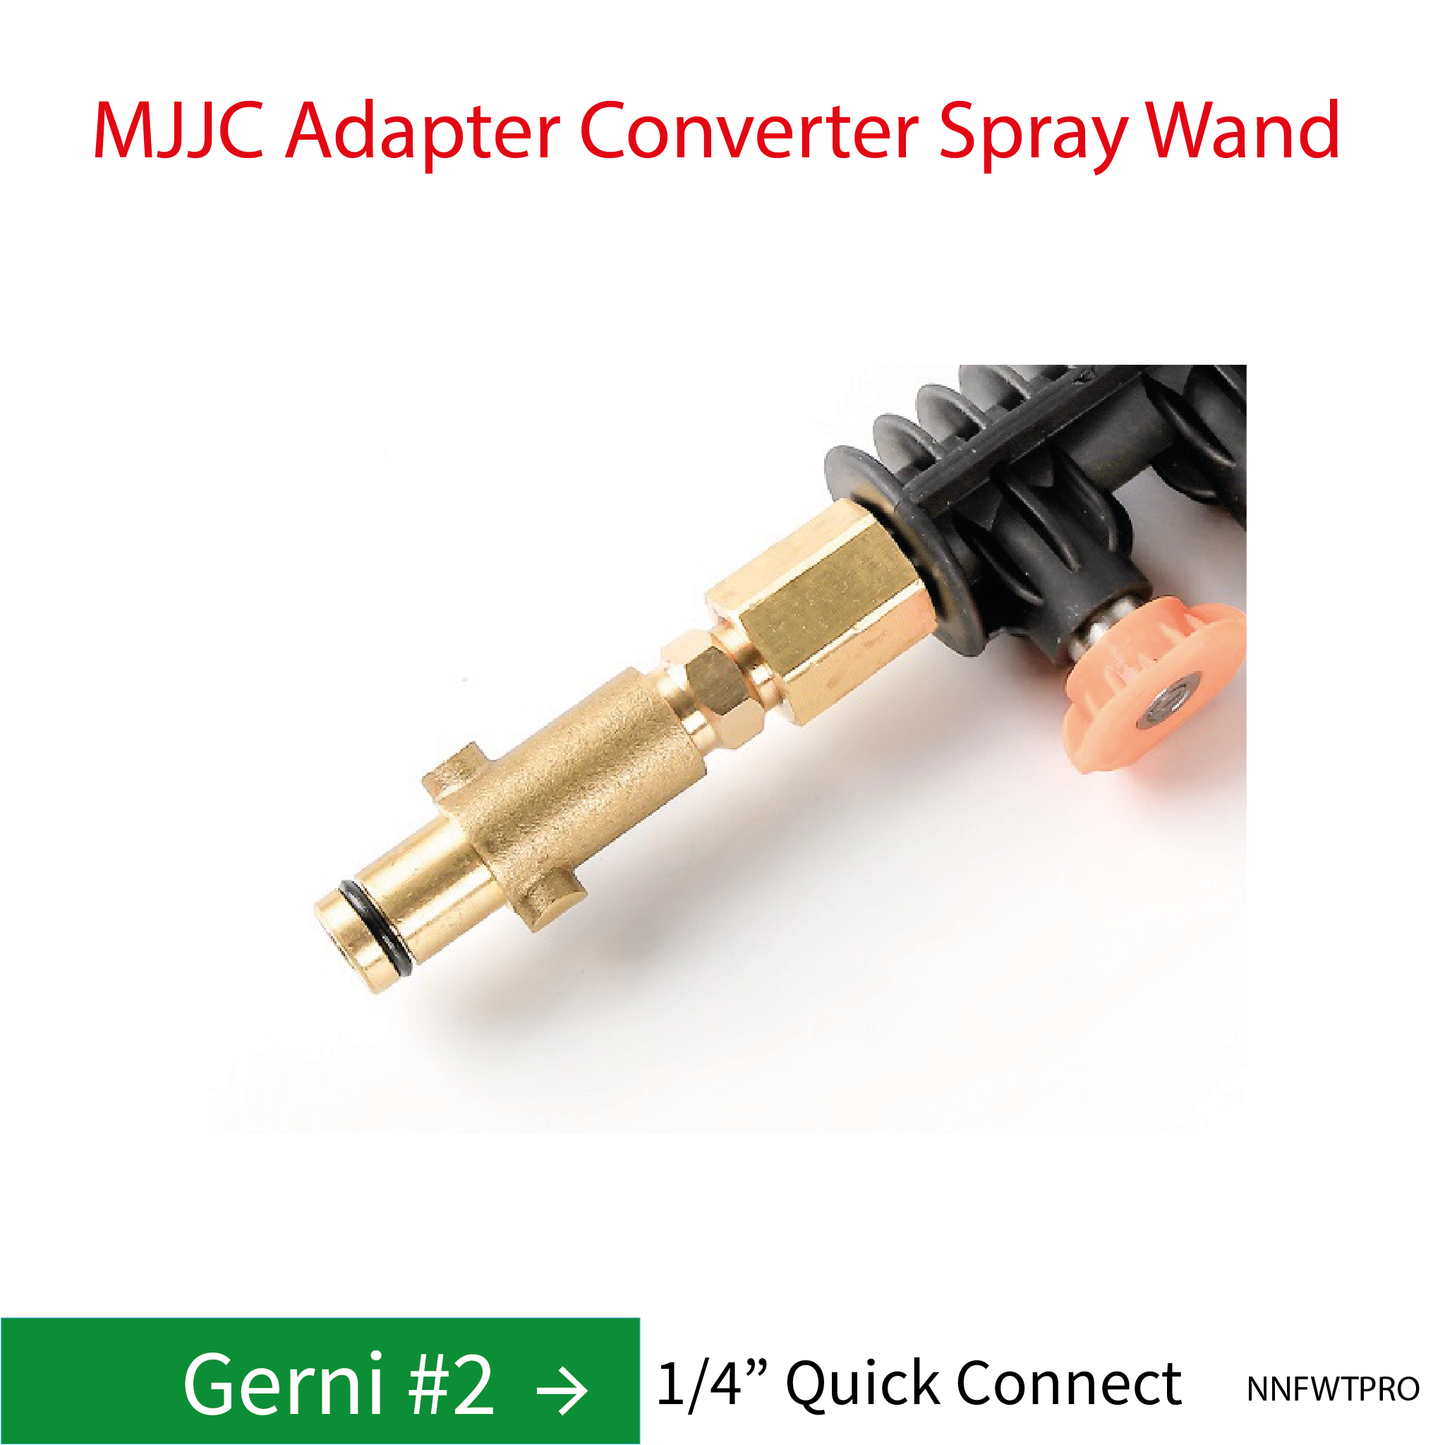 Gerni MJJC Adapter Conversion Converter Pressure Washer Spray Wand with 5 Spray Tips